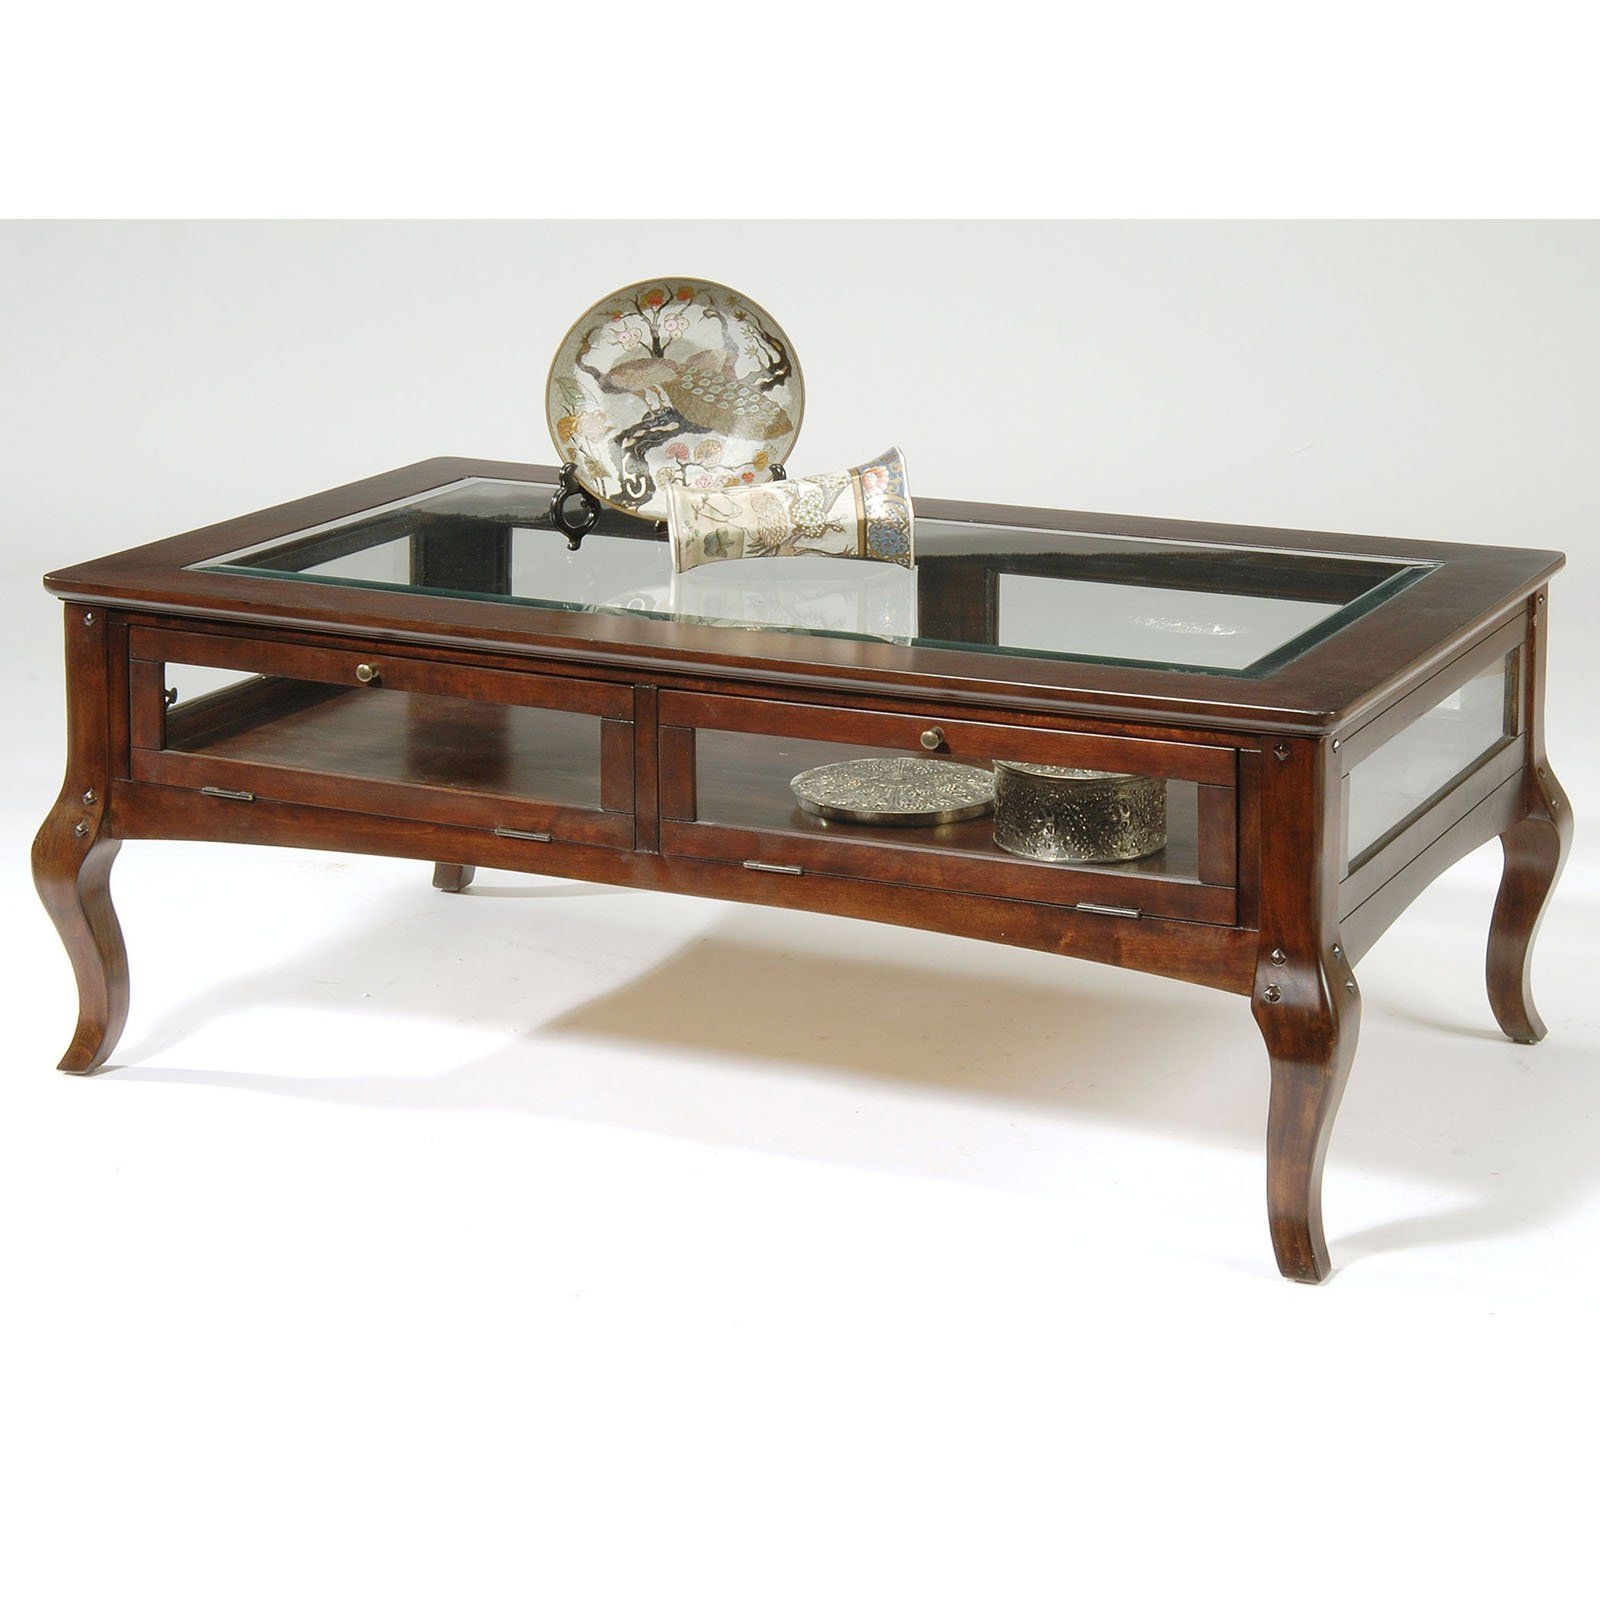 Display Case - Vintage Style Table Top Shadow Box, Shadow Box